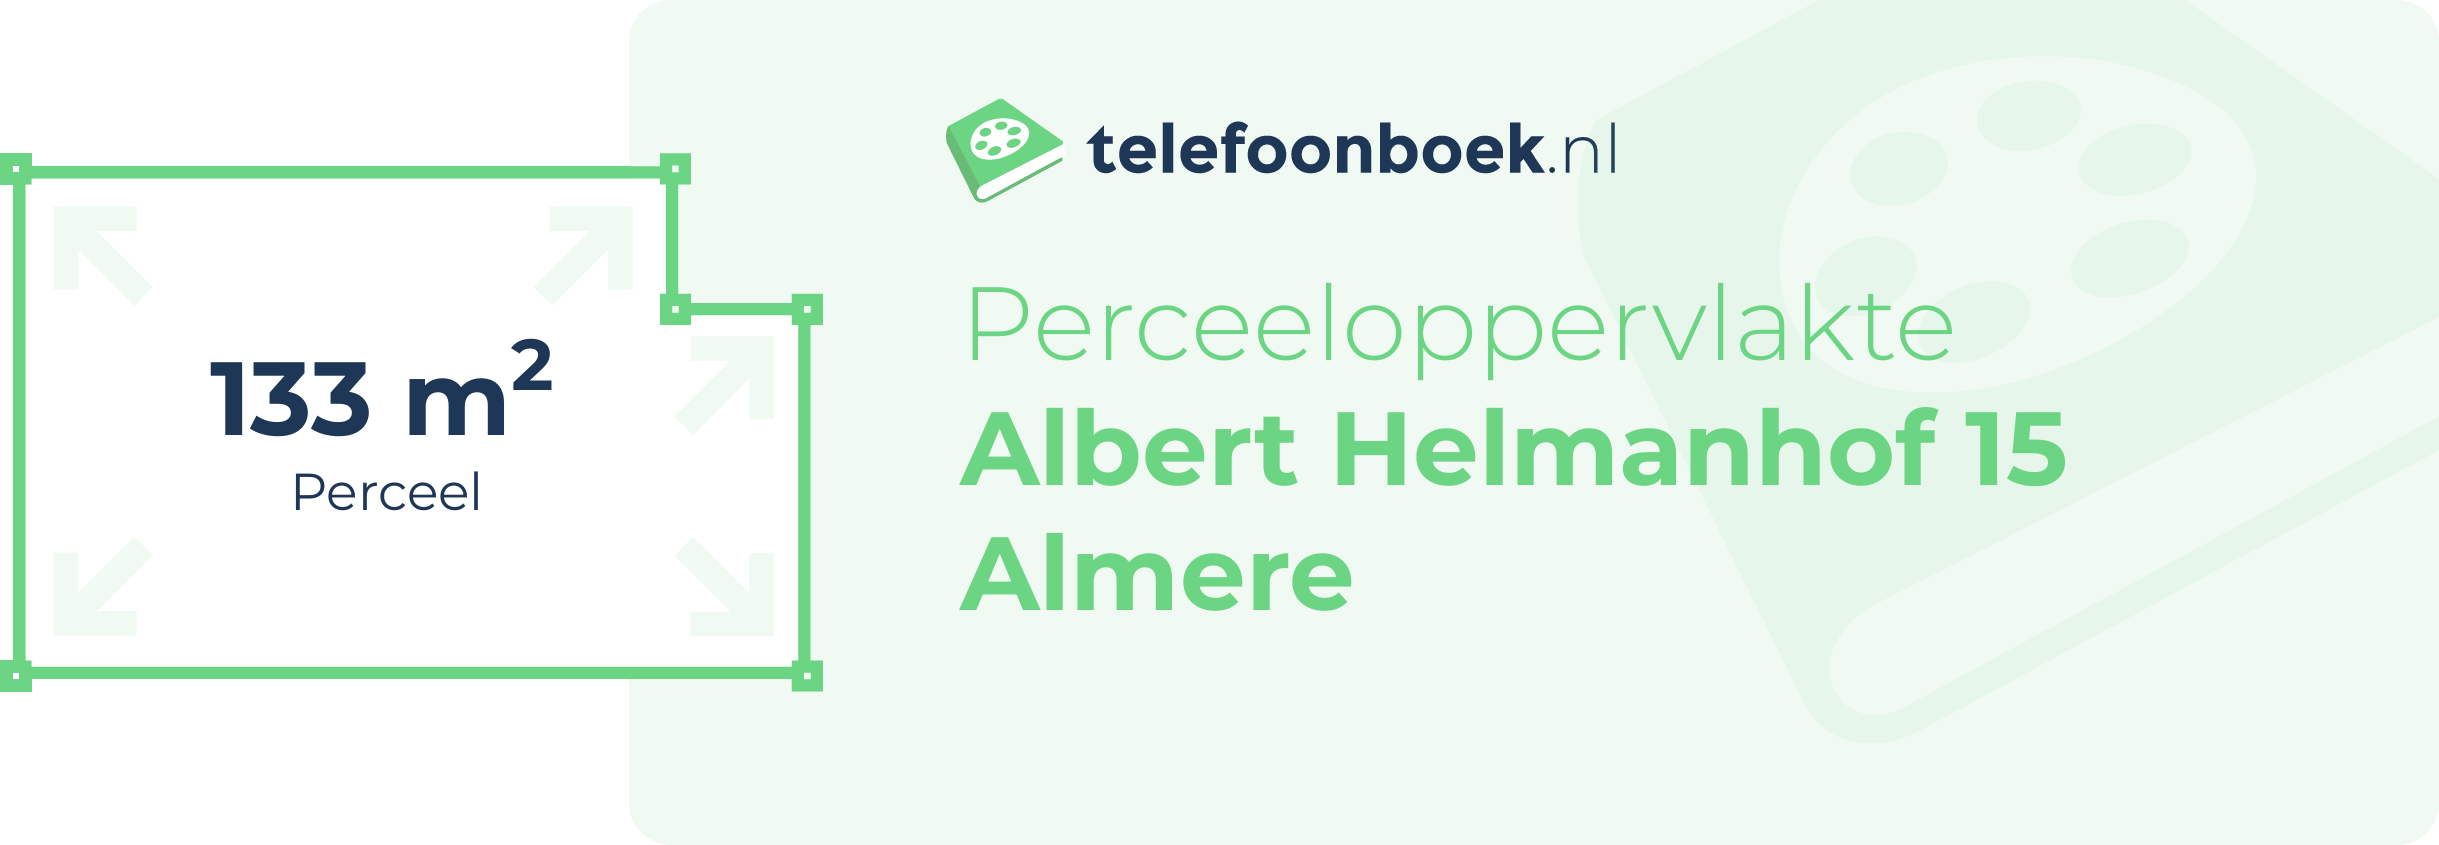 Perceeloppervlakte Albert Helmanhof 15 Almere